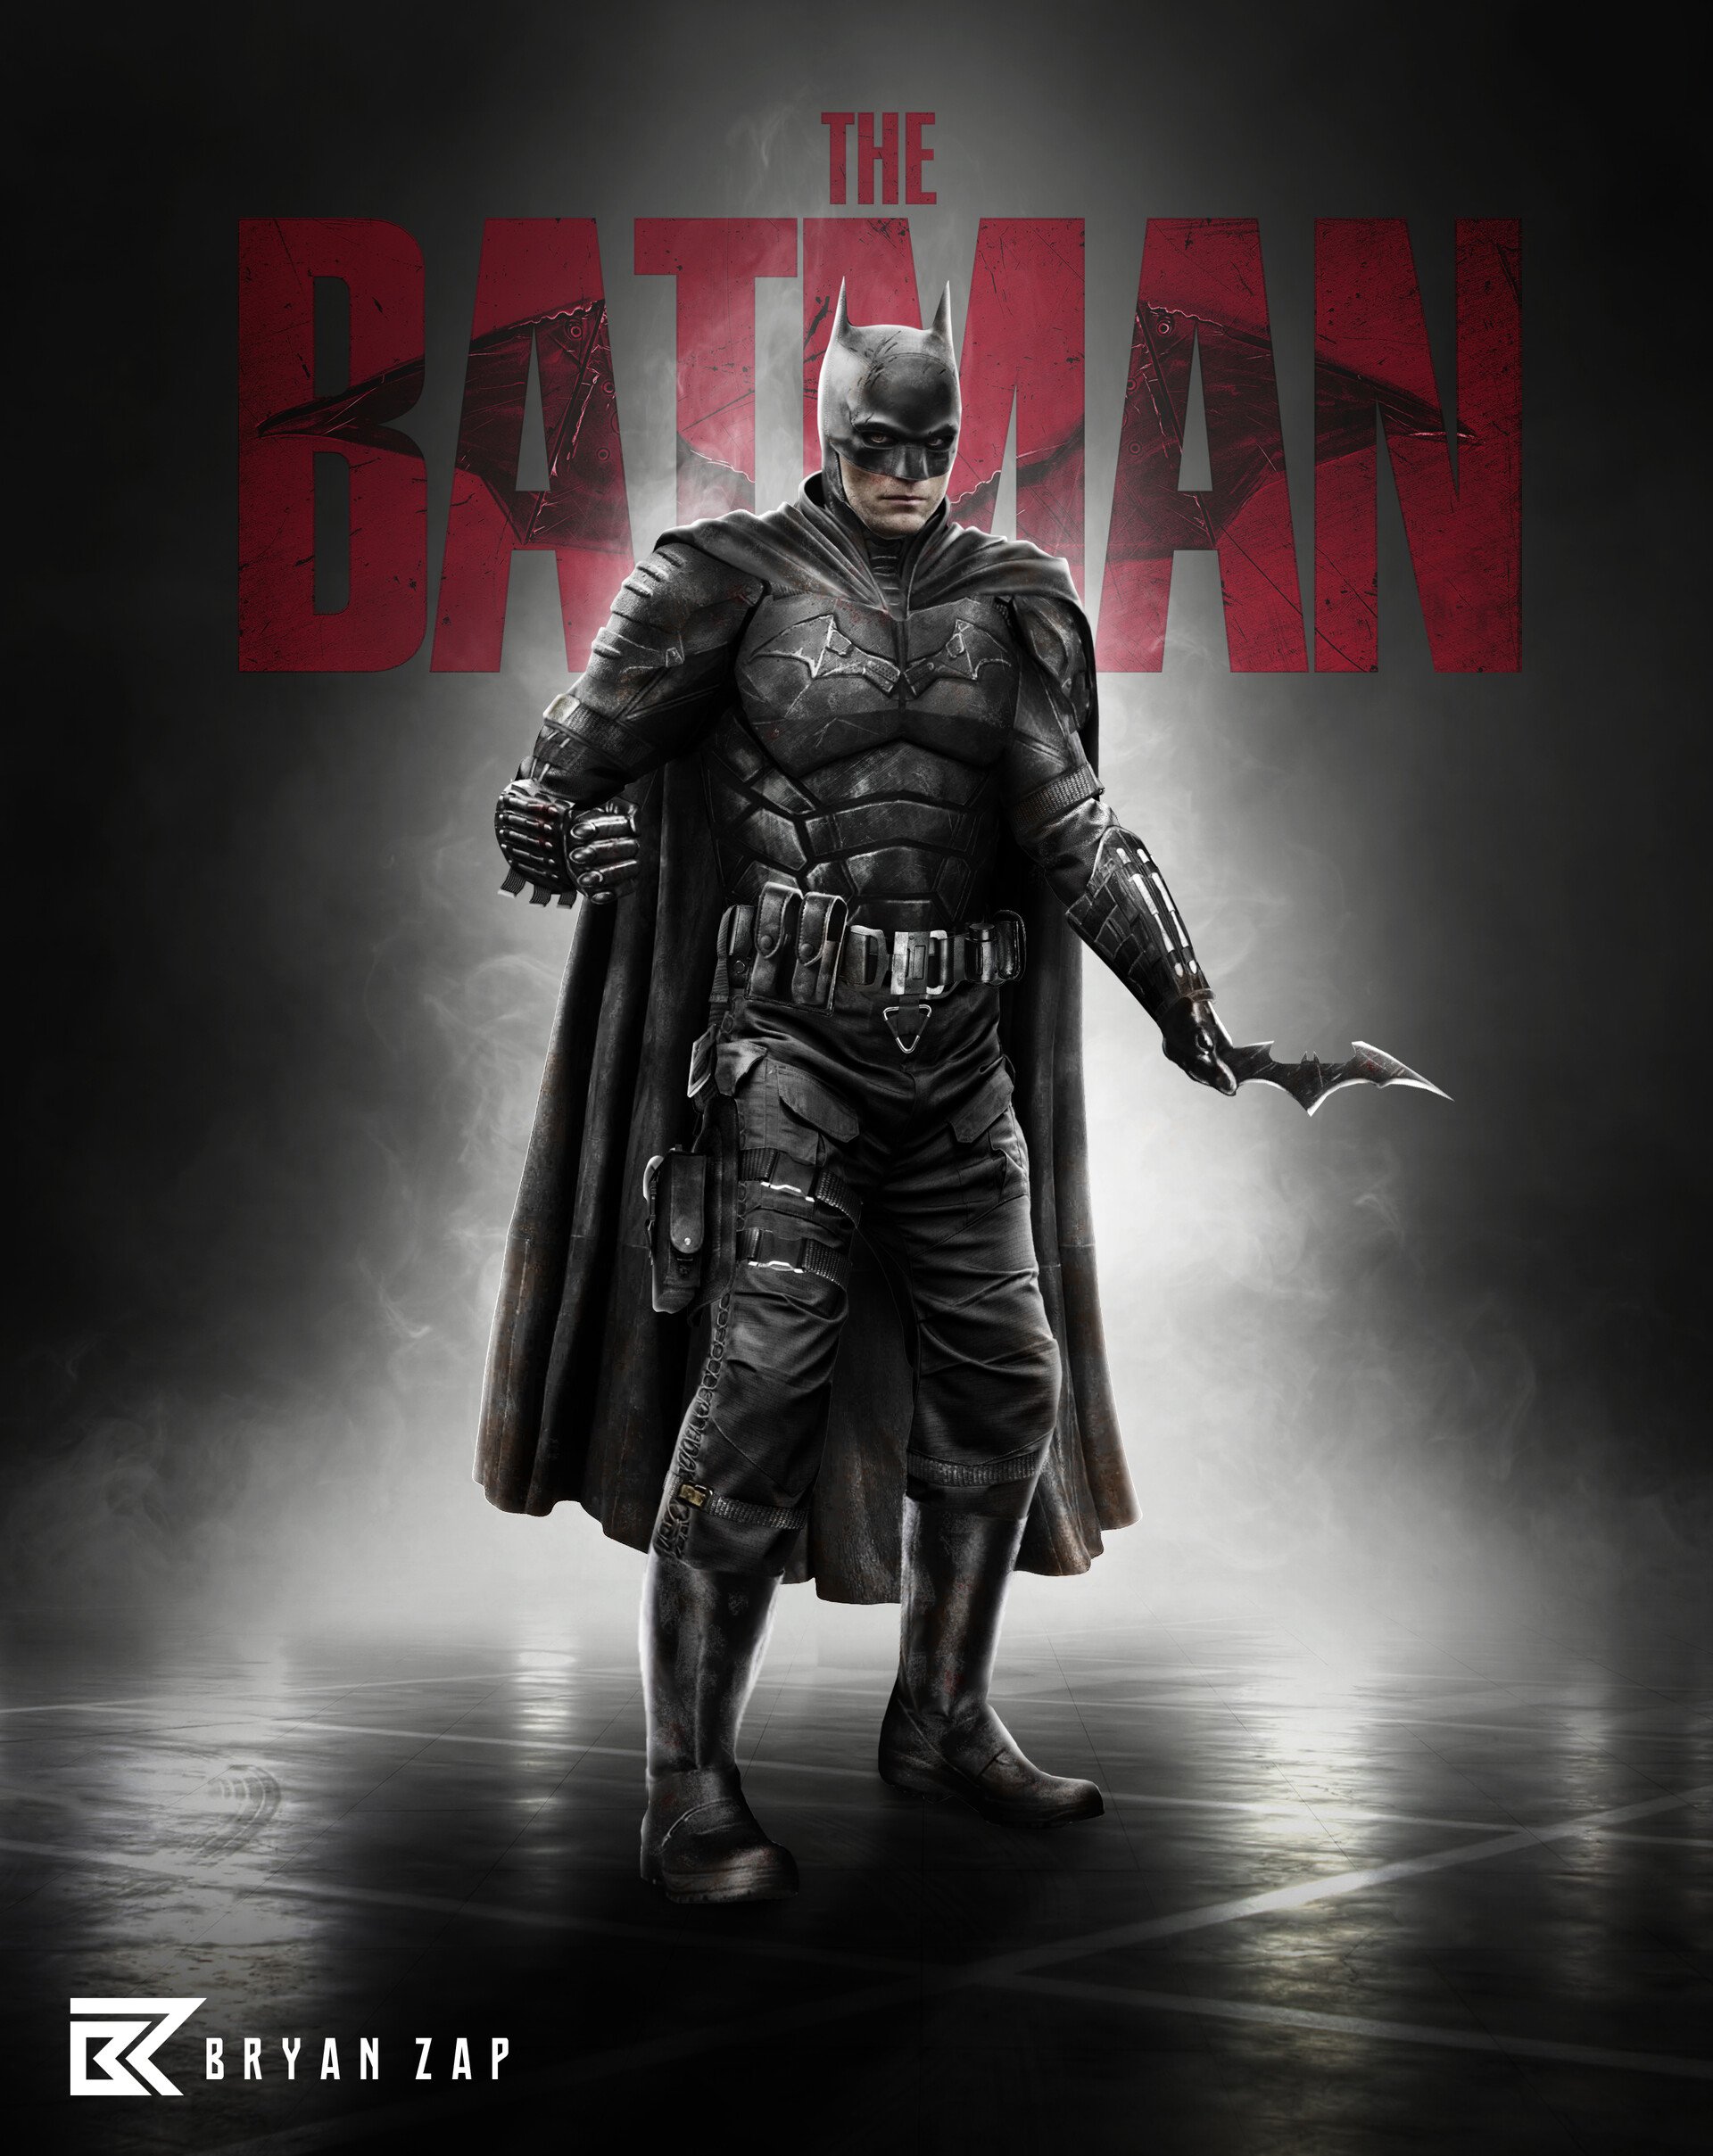 Artist Creates Impressive Poster for Ben Affleck's Solo Batman Film